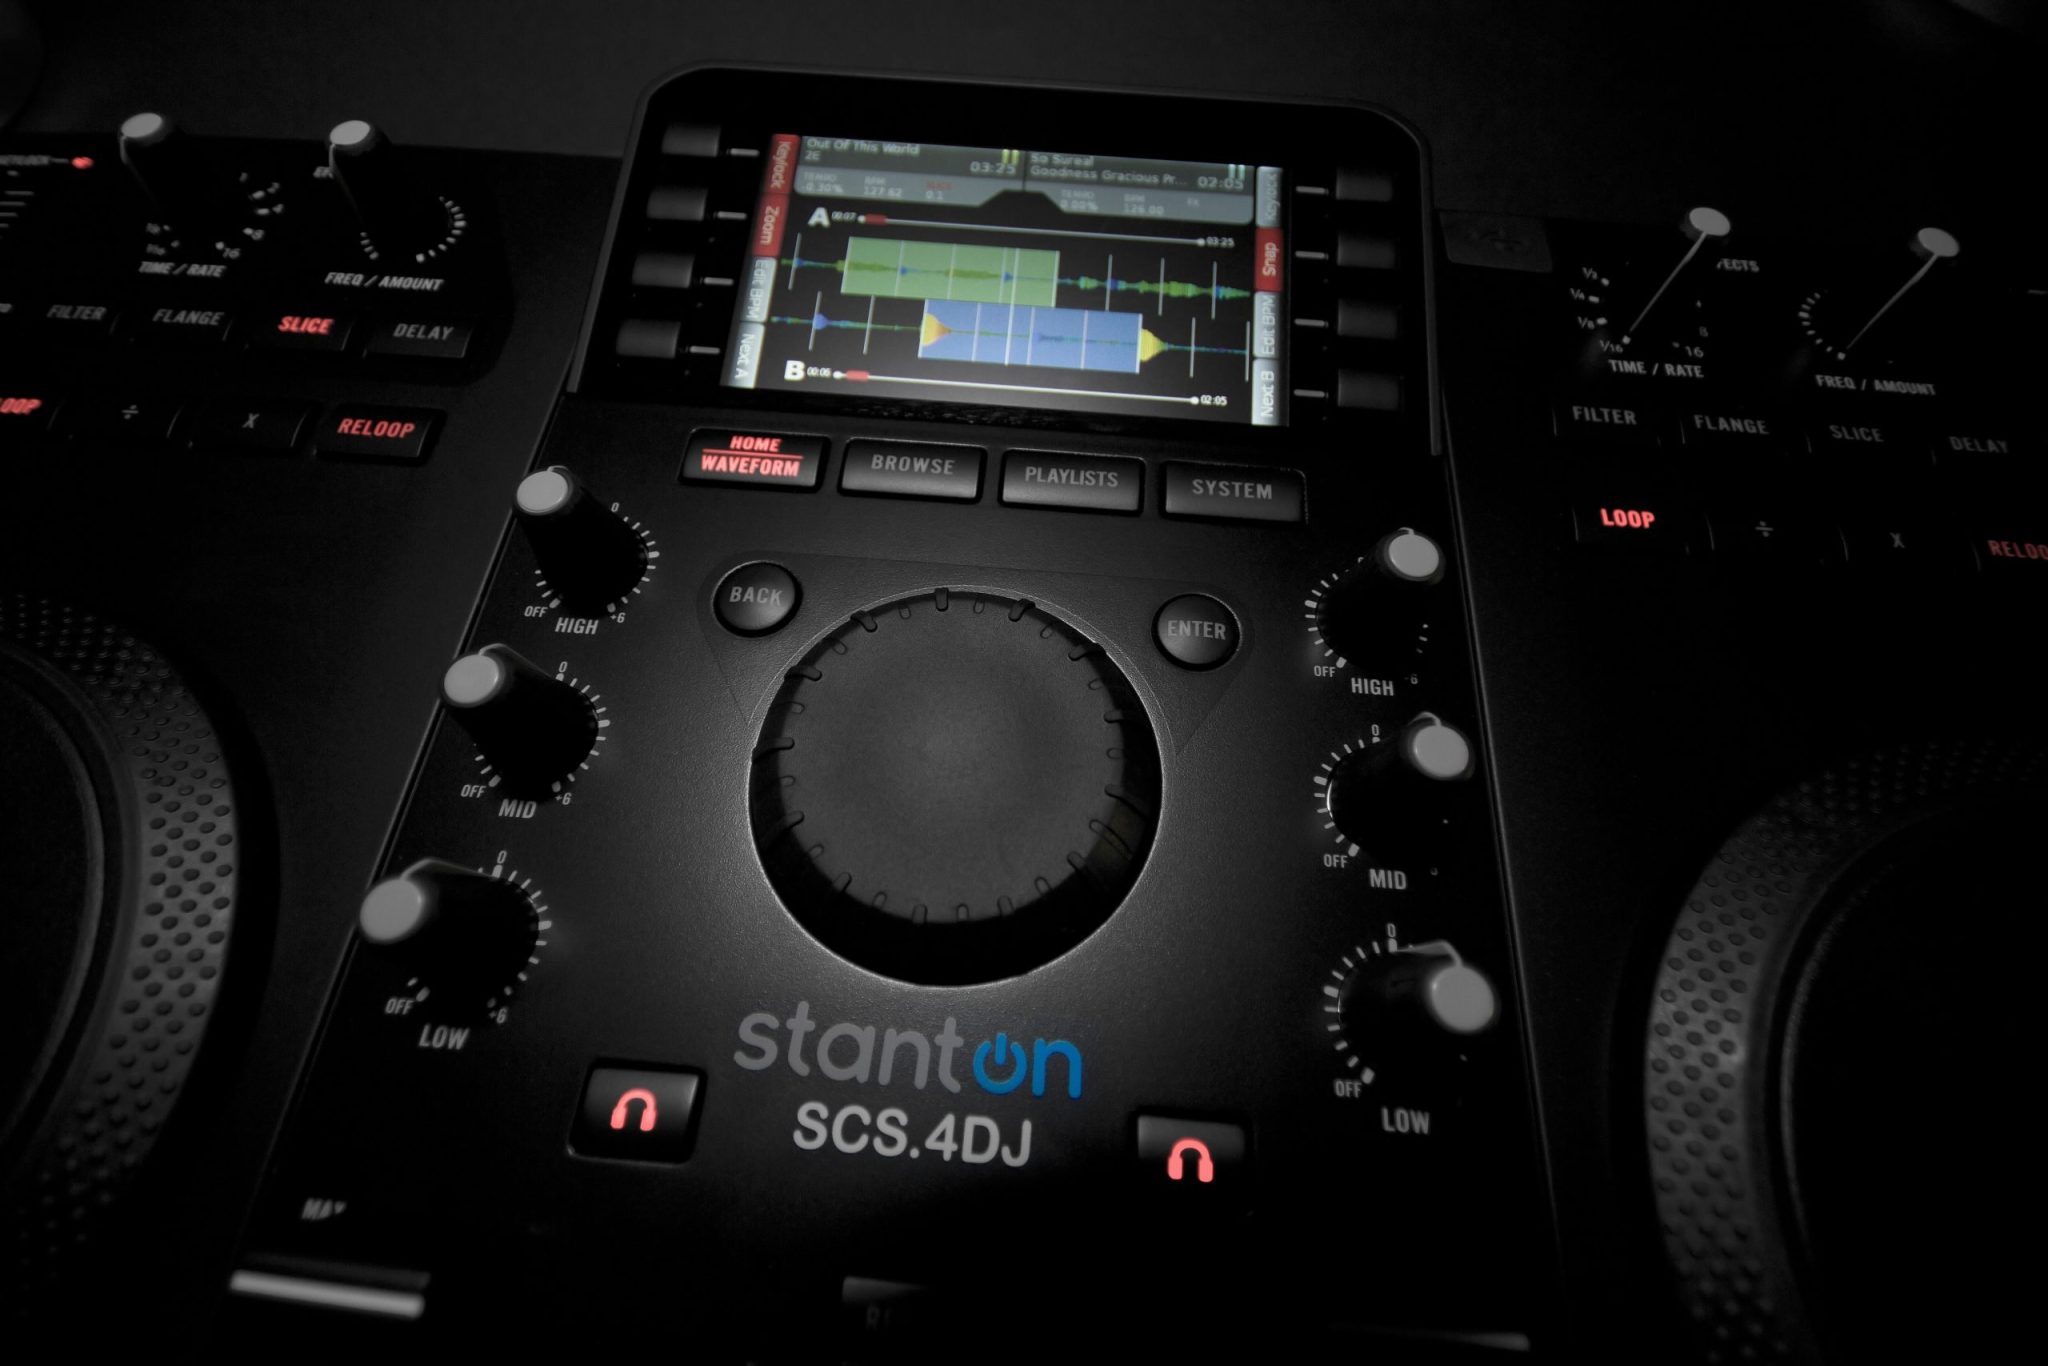 Stanton SCS.4DJ standalone controller review (29)